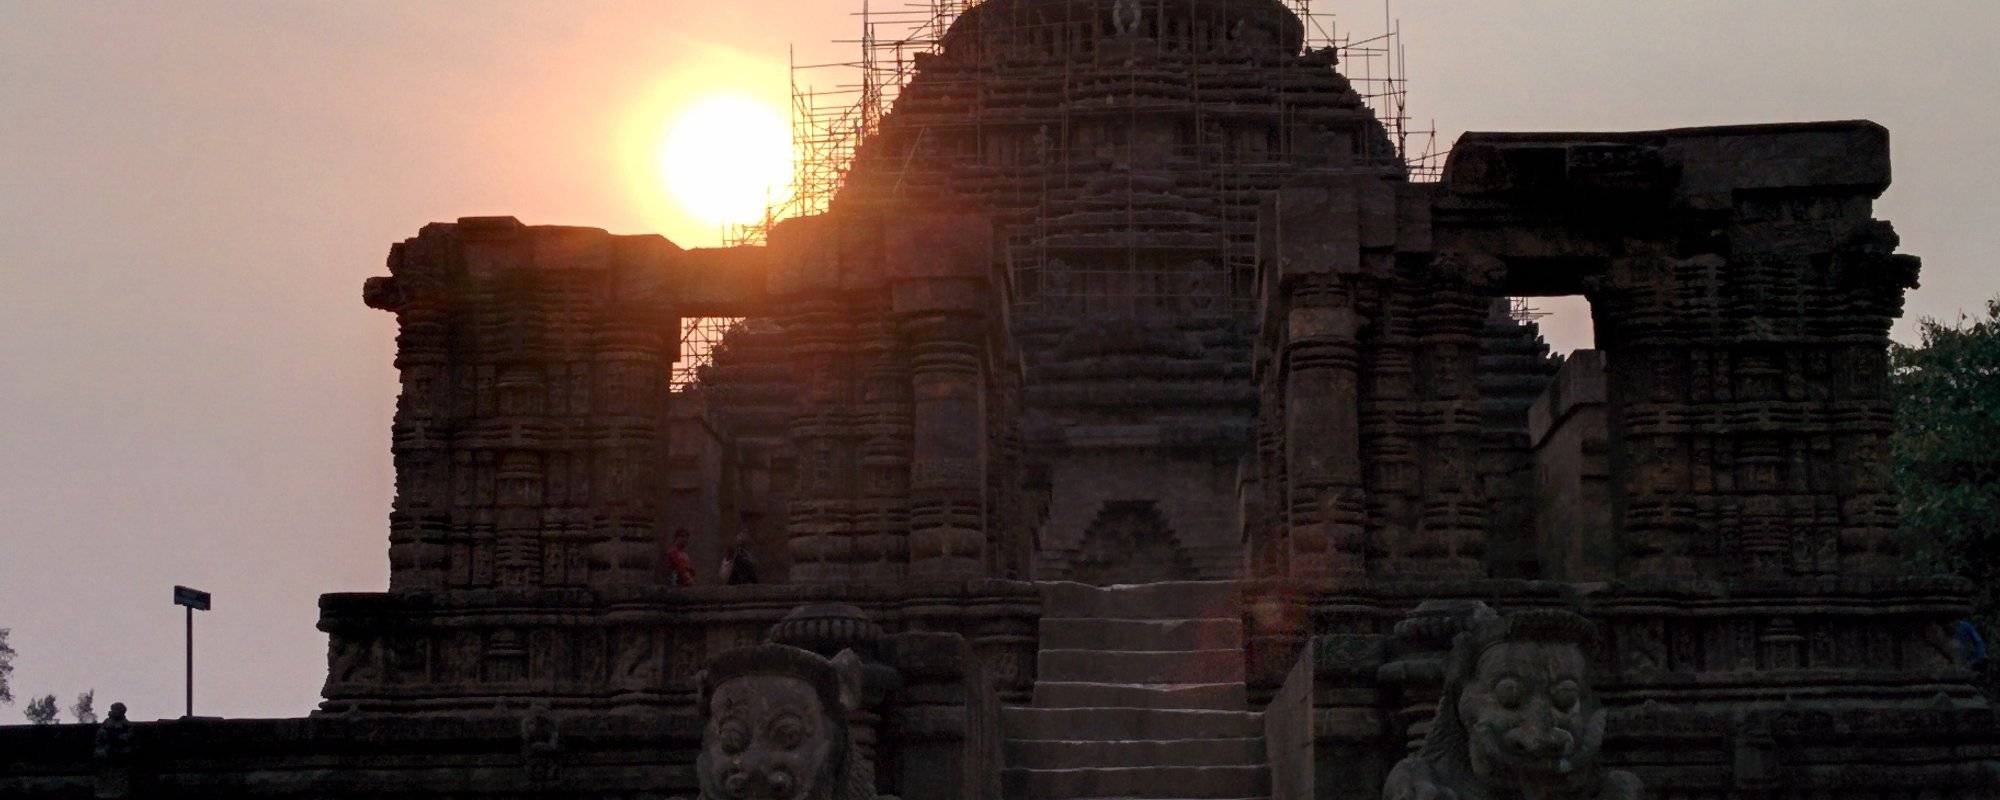 Travelogue Series 5 - Konark Sun Temple - Odisha , India